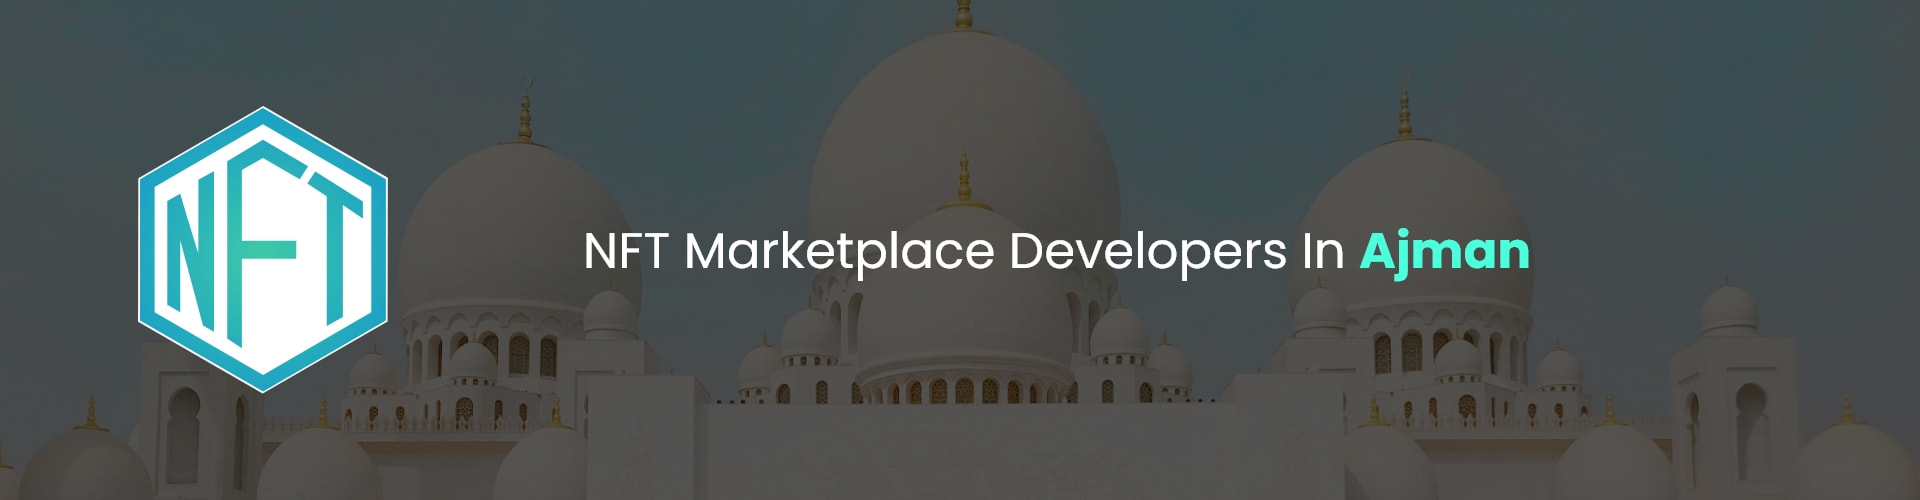 hire nft marketplace developers in ajman